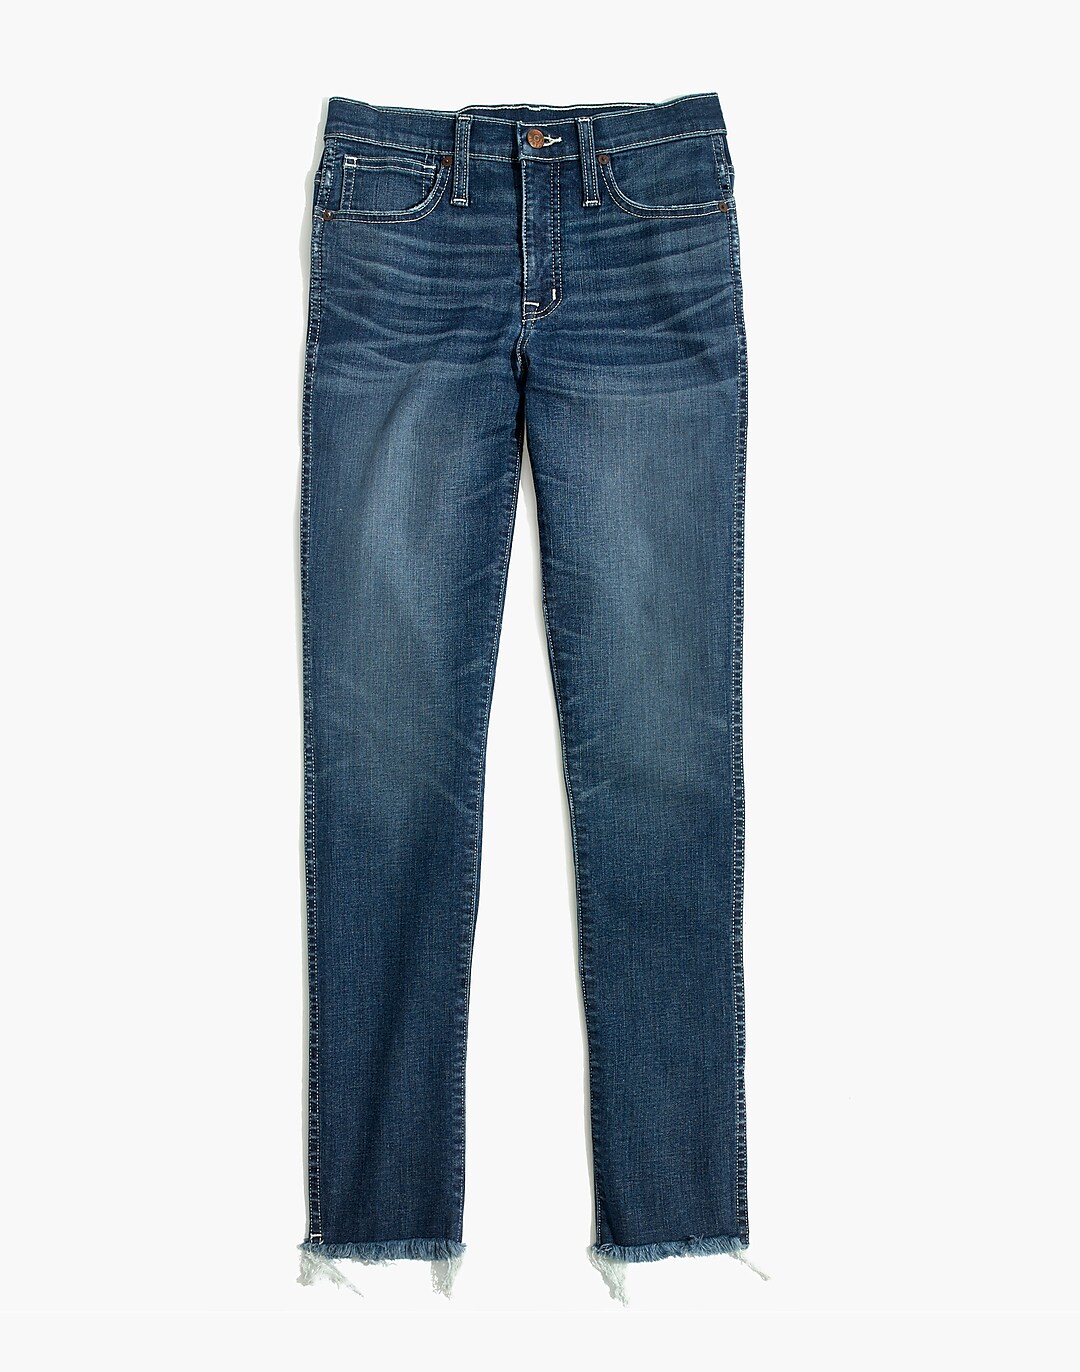 præcedens Validering entusiastisk Women's Slim Straight Jeans: Raw-Hem Edition | Madewell